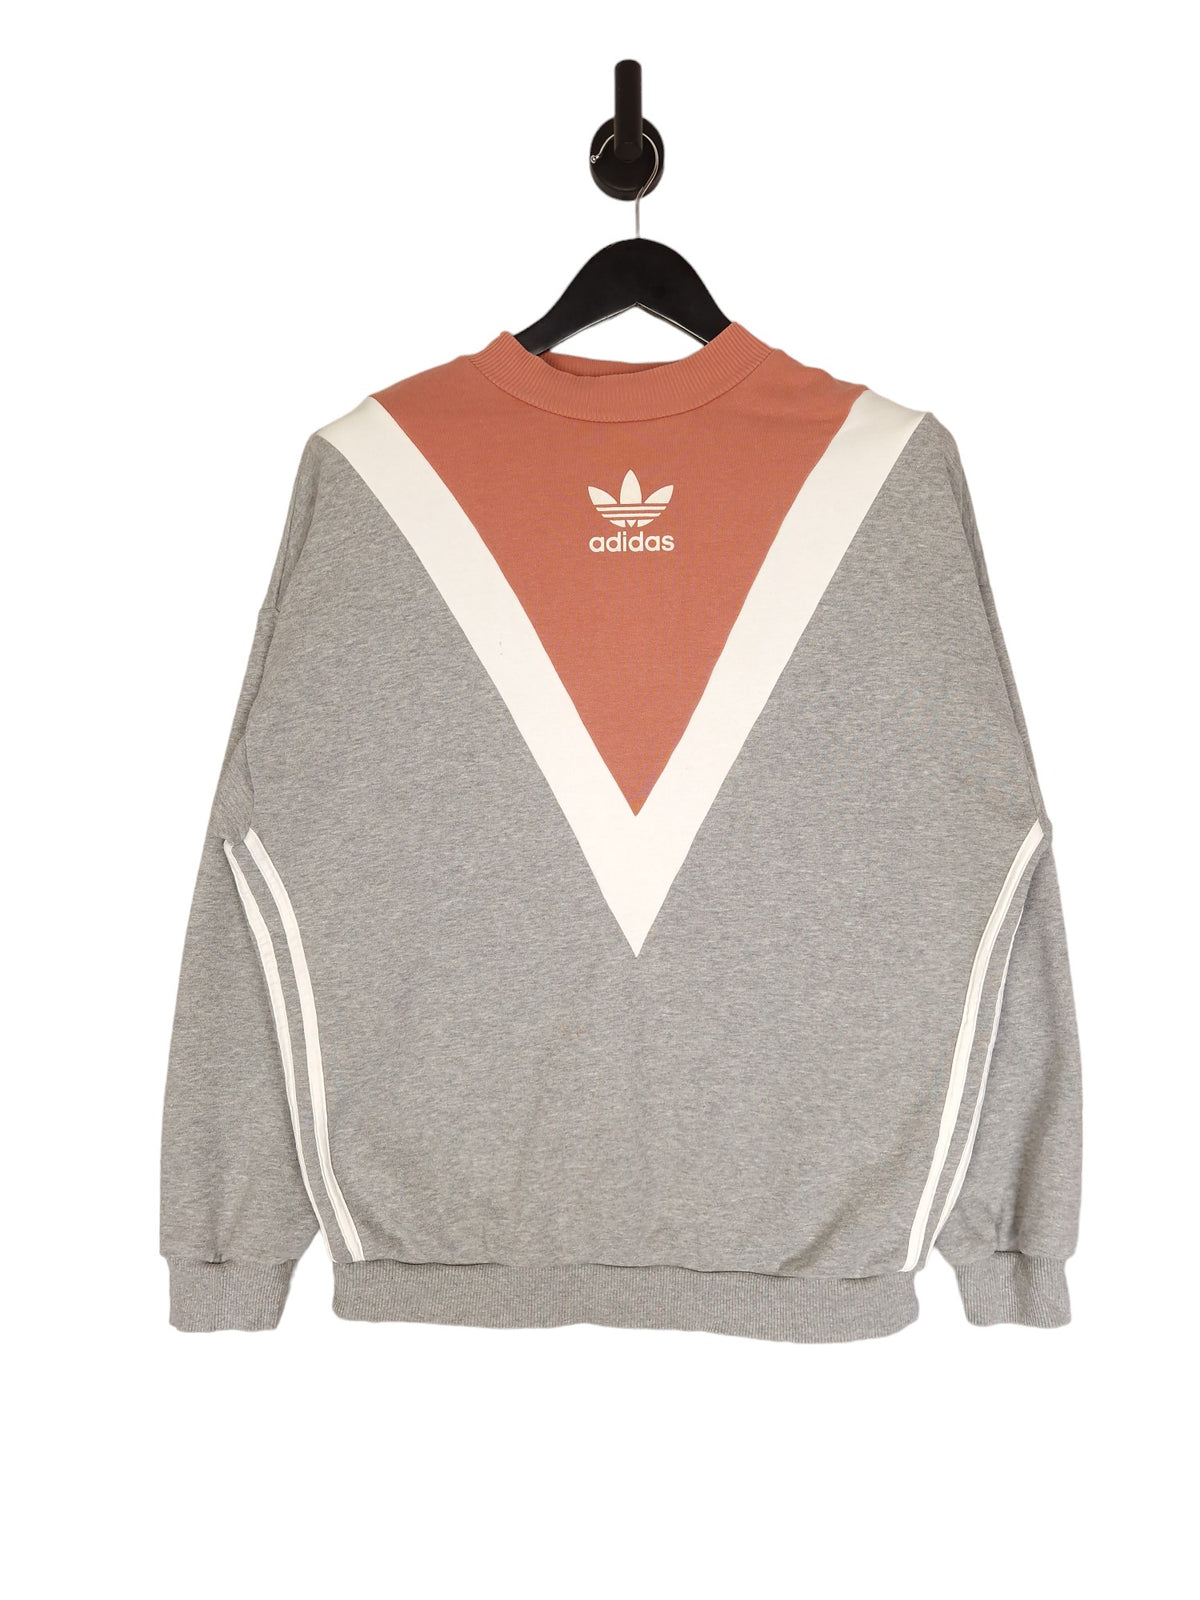 Adidas Sweatshirt - Size UK 14